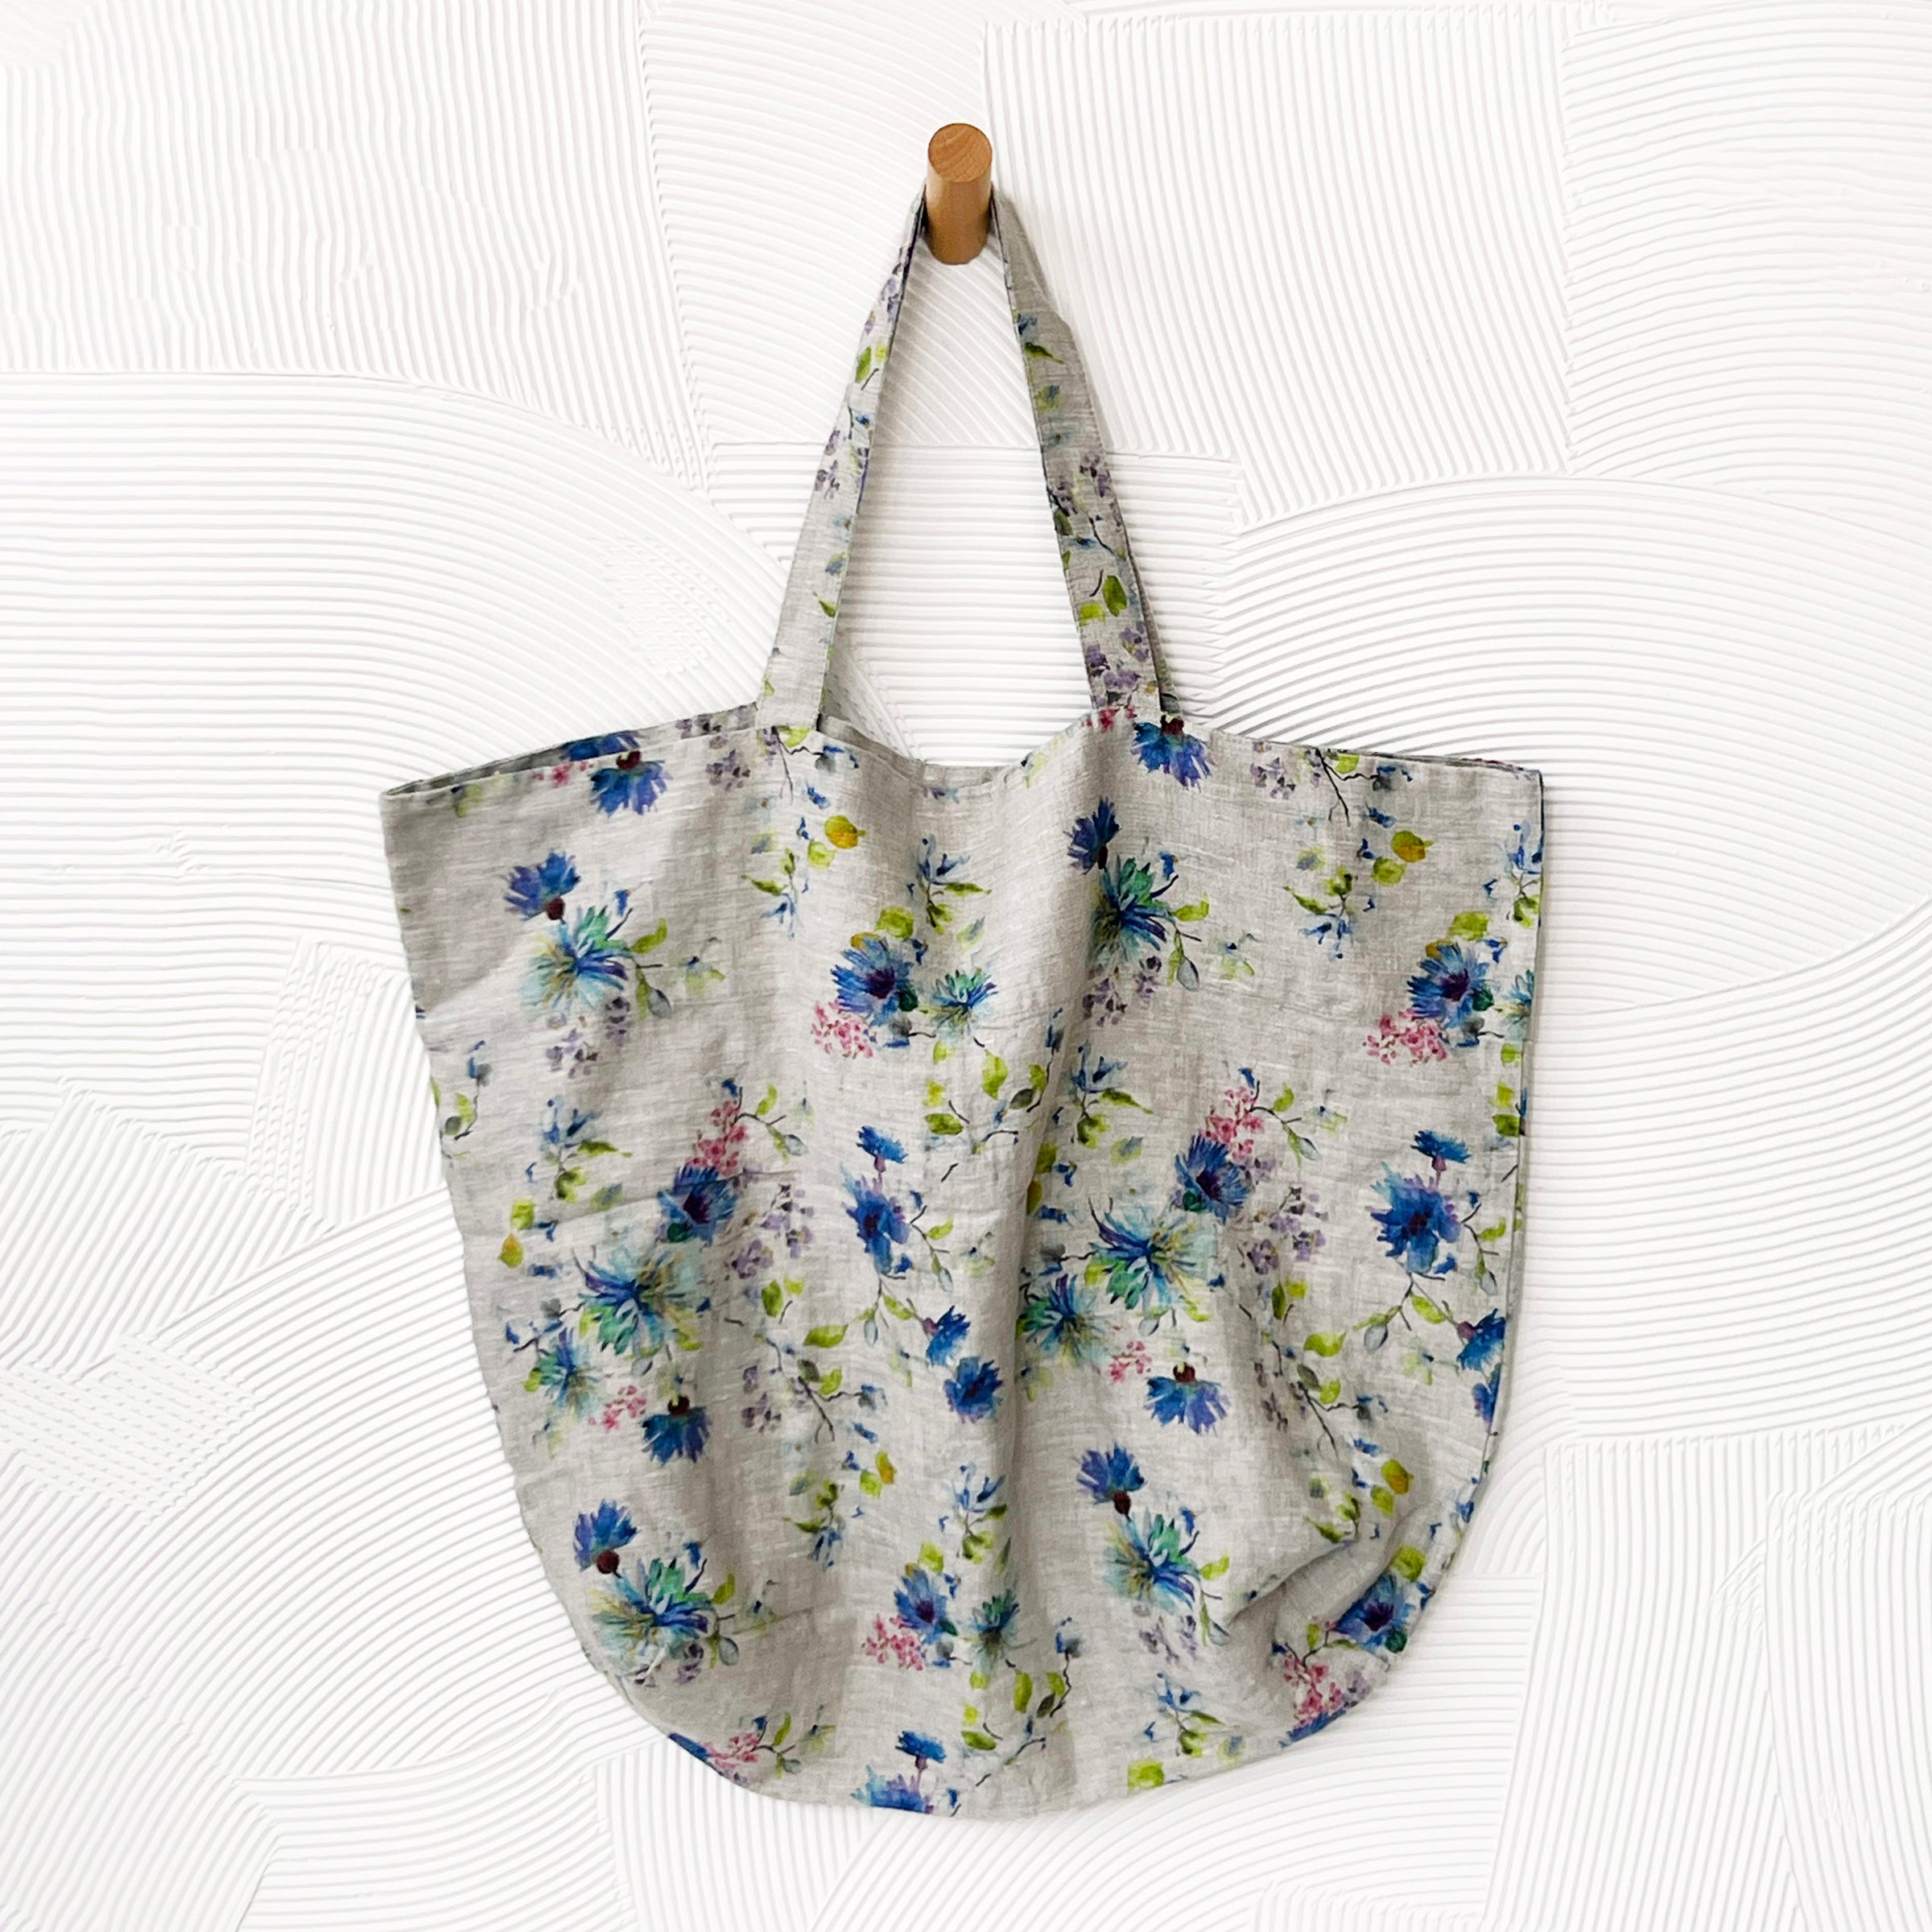 Natural Linen Bag in Flowers